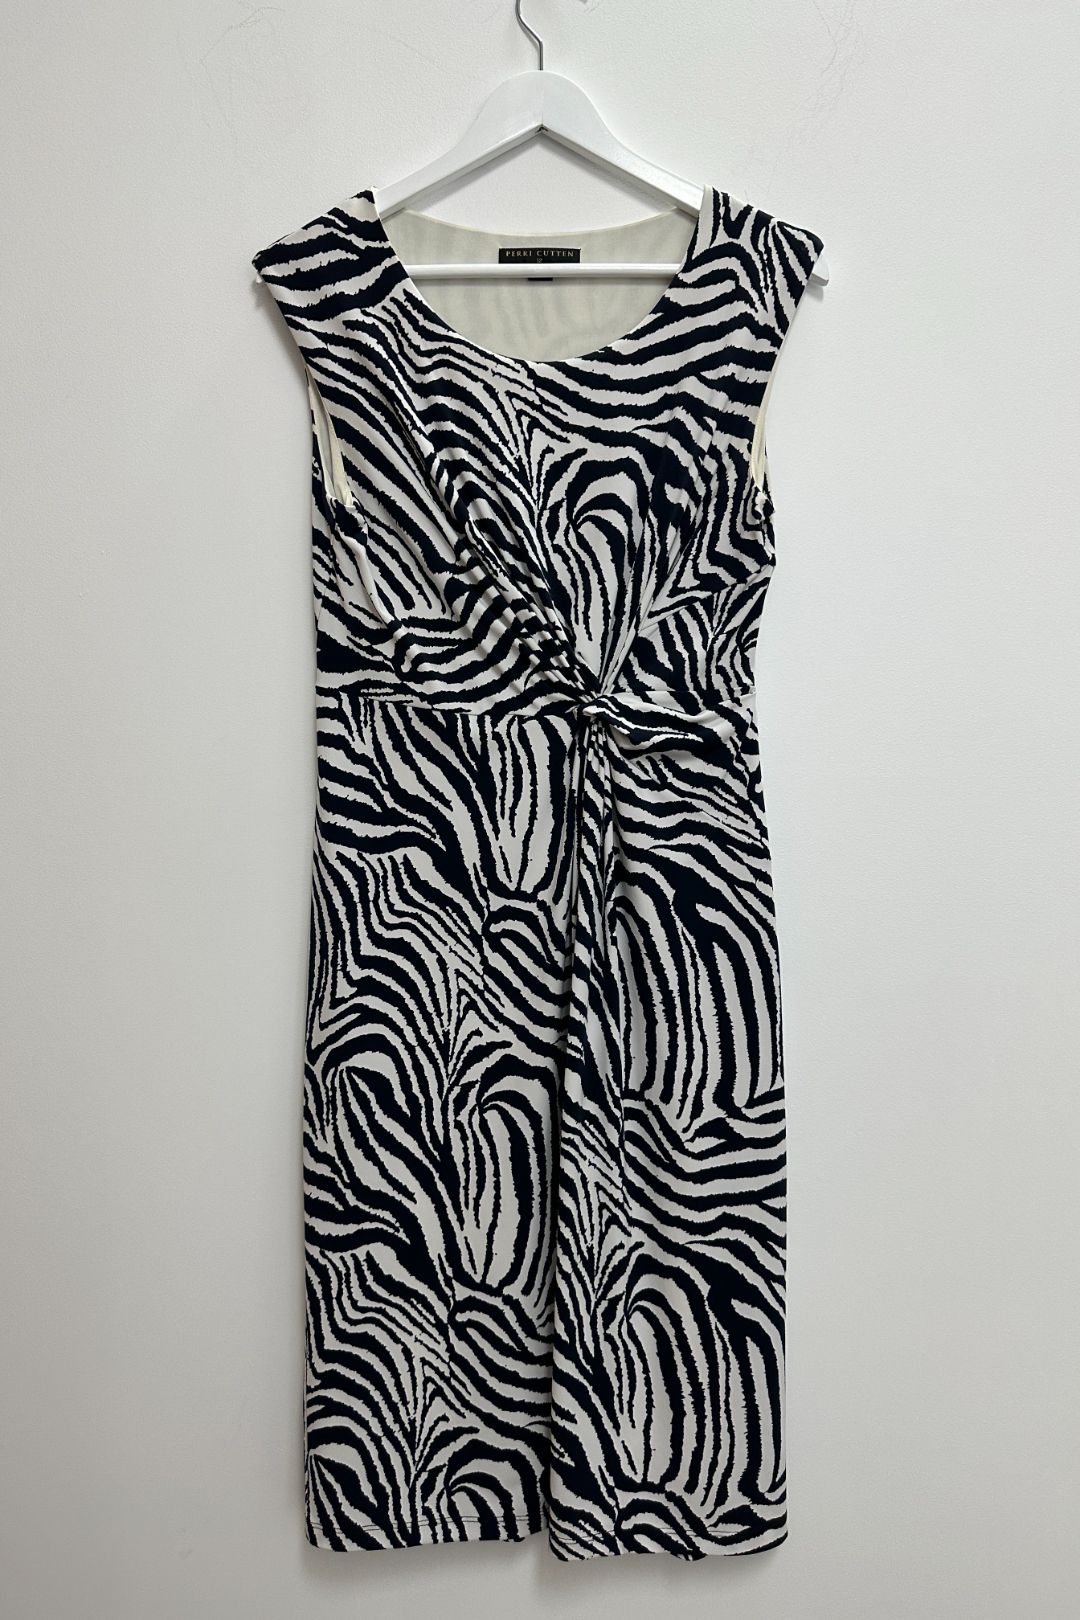 Perri Cutten Black And White Animal Print Dress